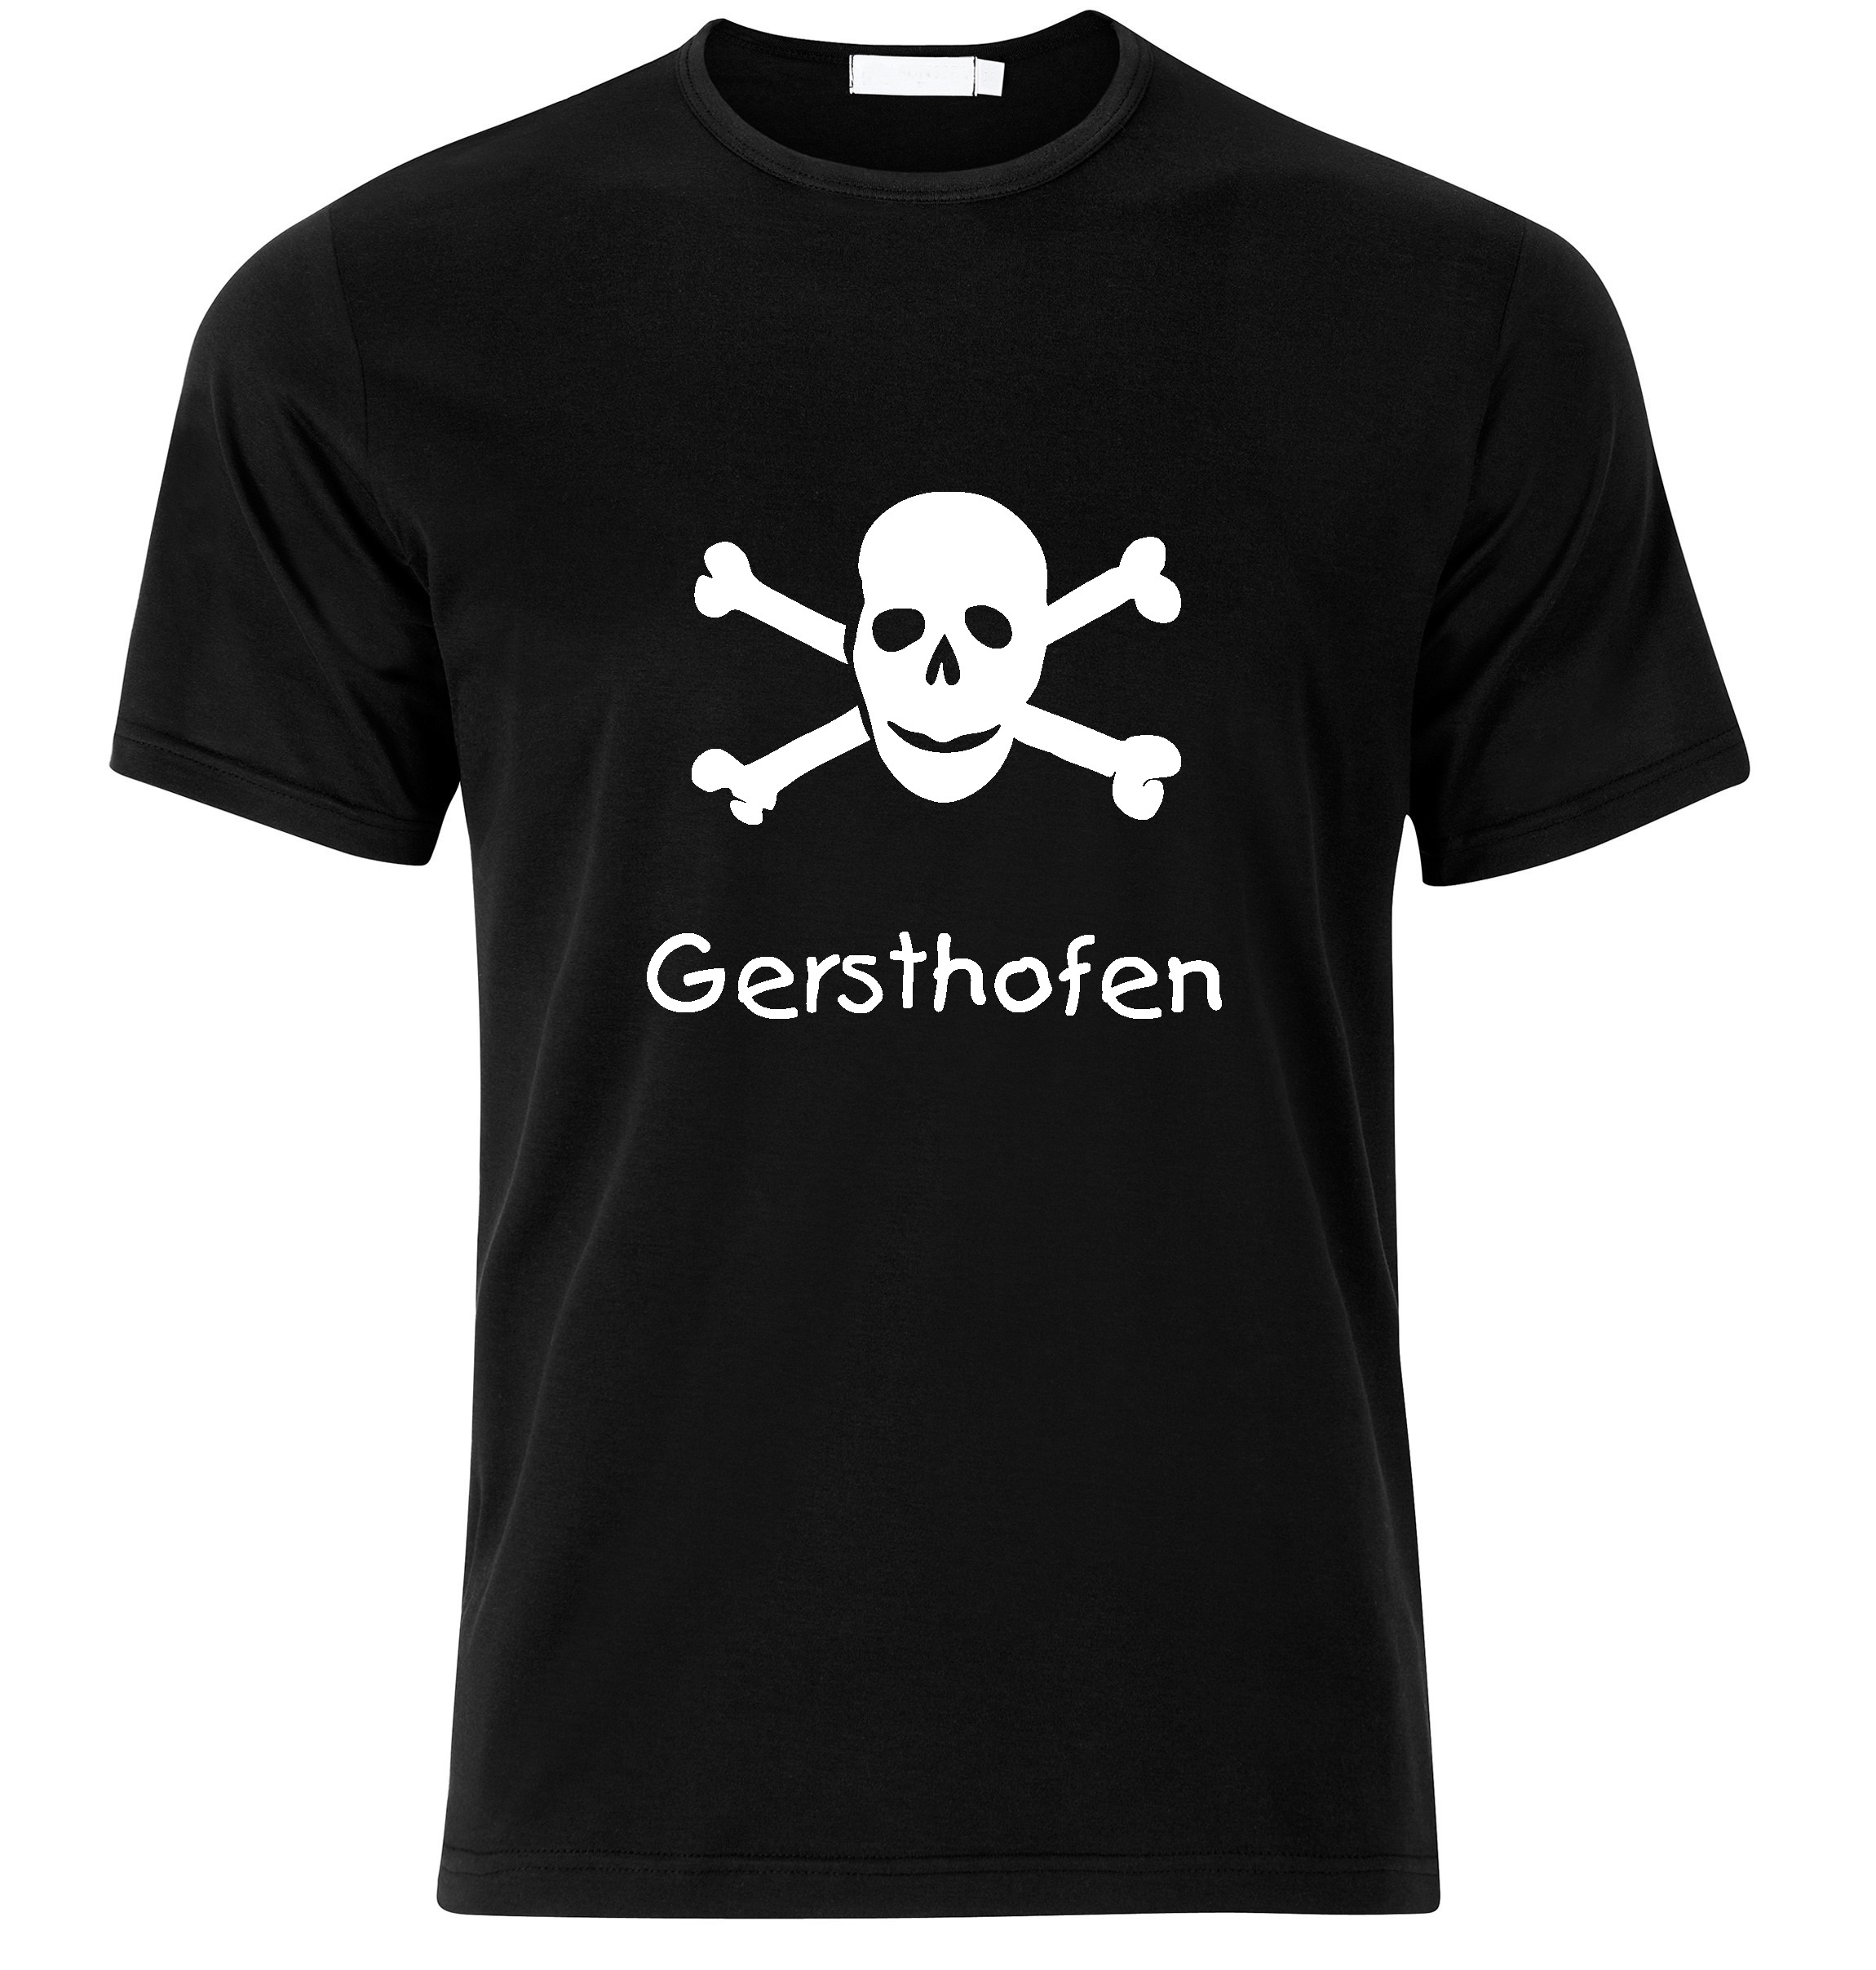 T-Shirt Gersthofen Jolly Roger, Totenkopf